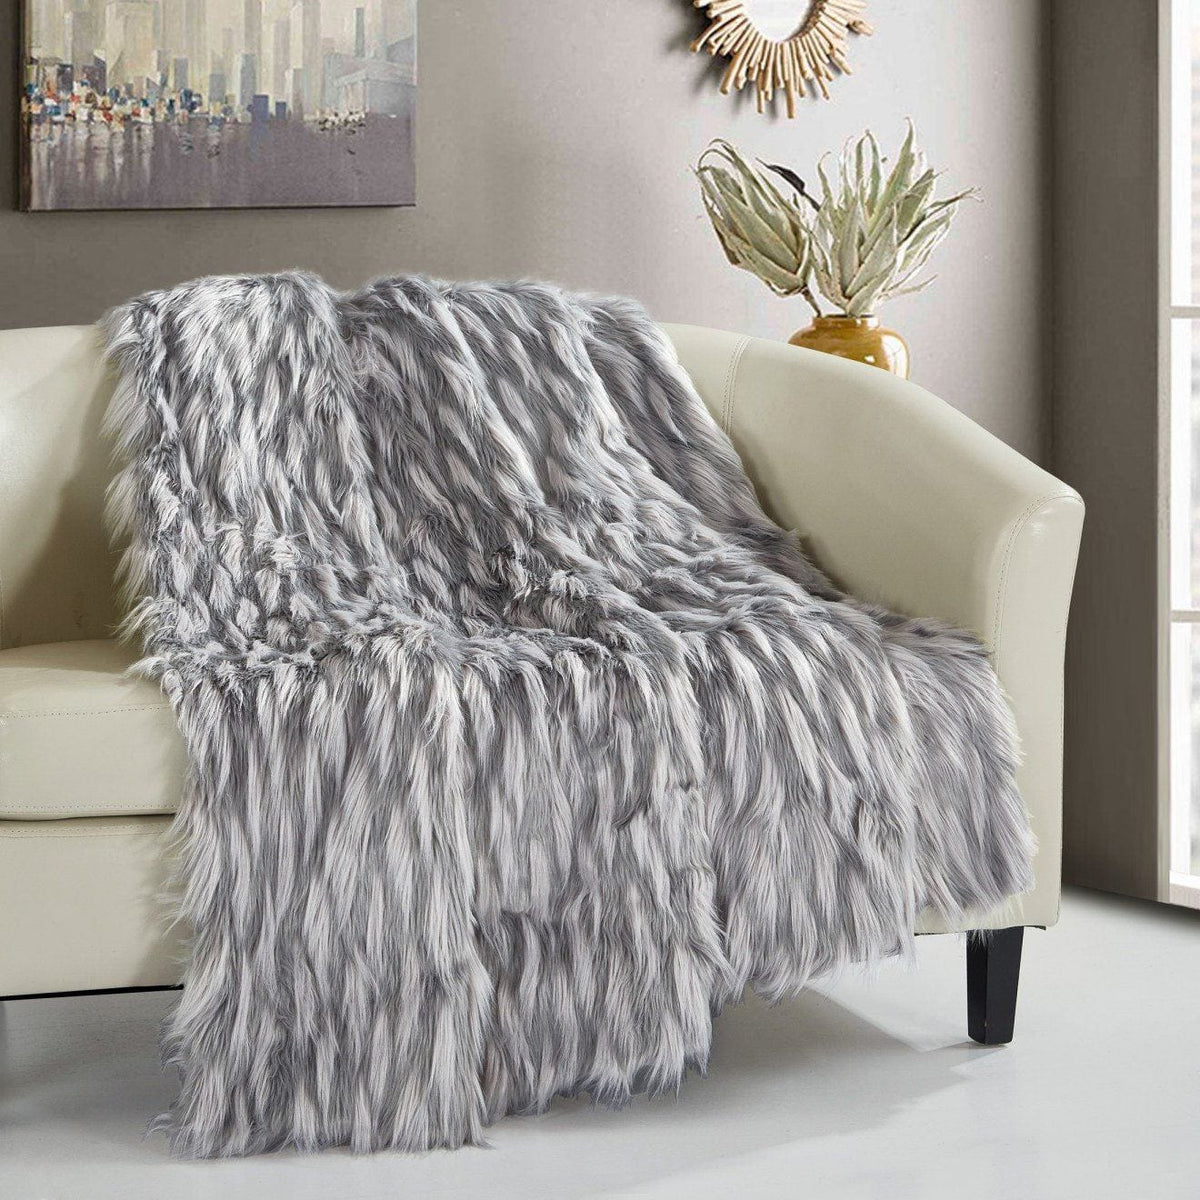 Chic Home Aviva Throw Blanket Cozy Super Soft Ultra Plush Two Tone Design Grey